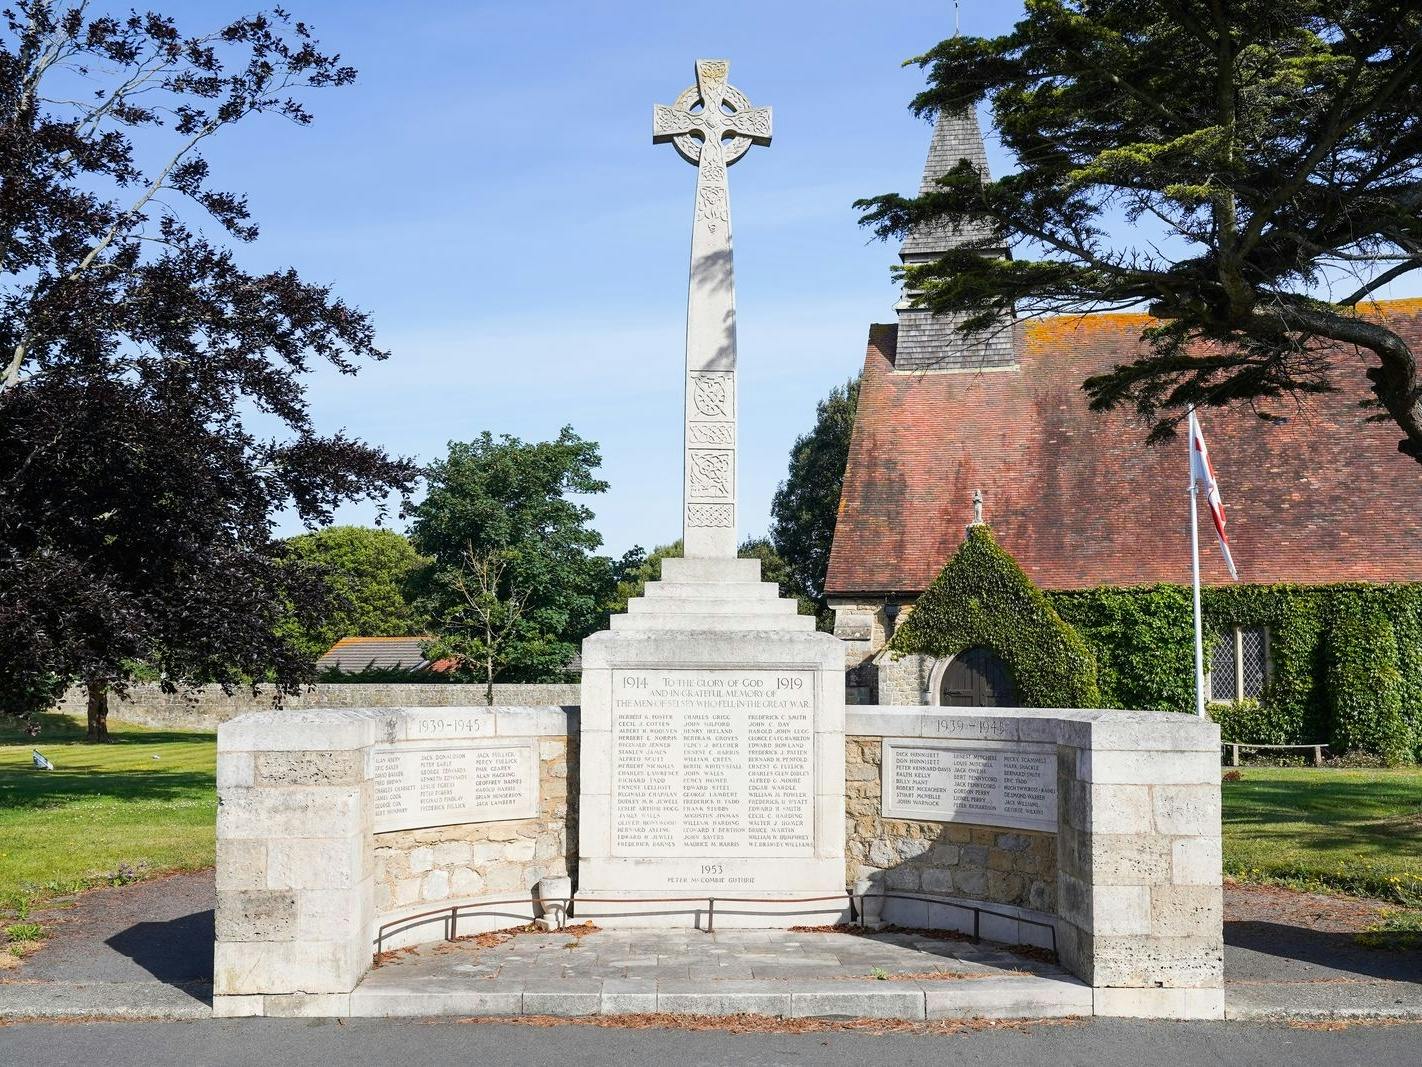 Selsey War Memorial, St Peter's Church, courtesy of CoastalJJ